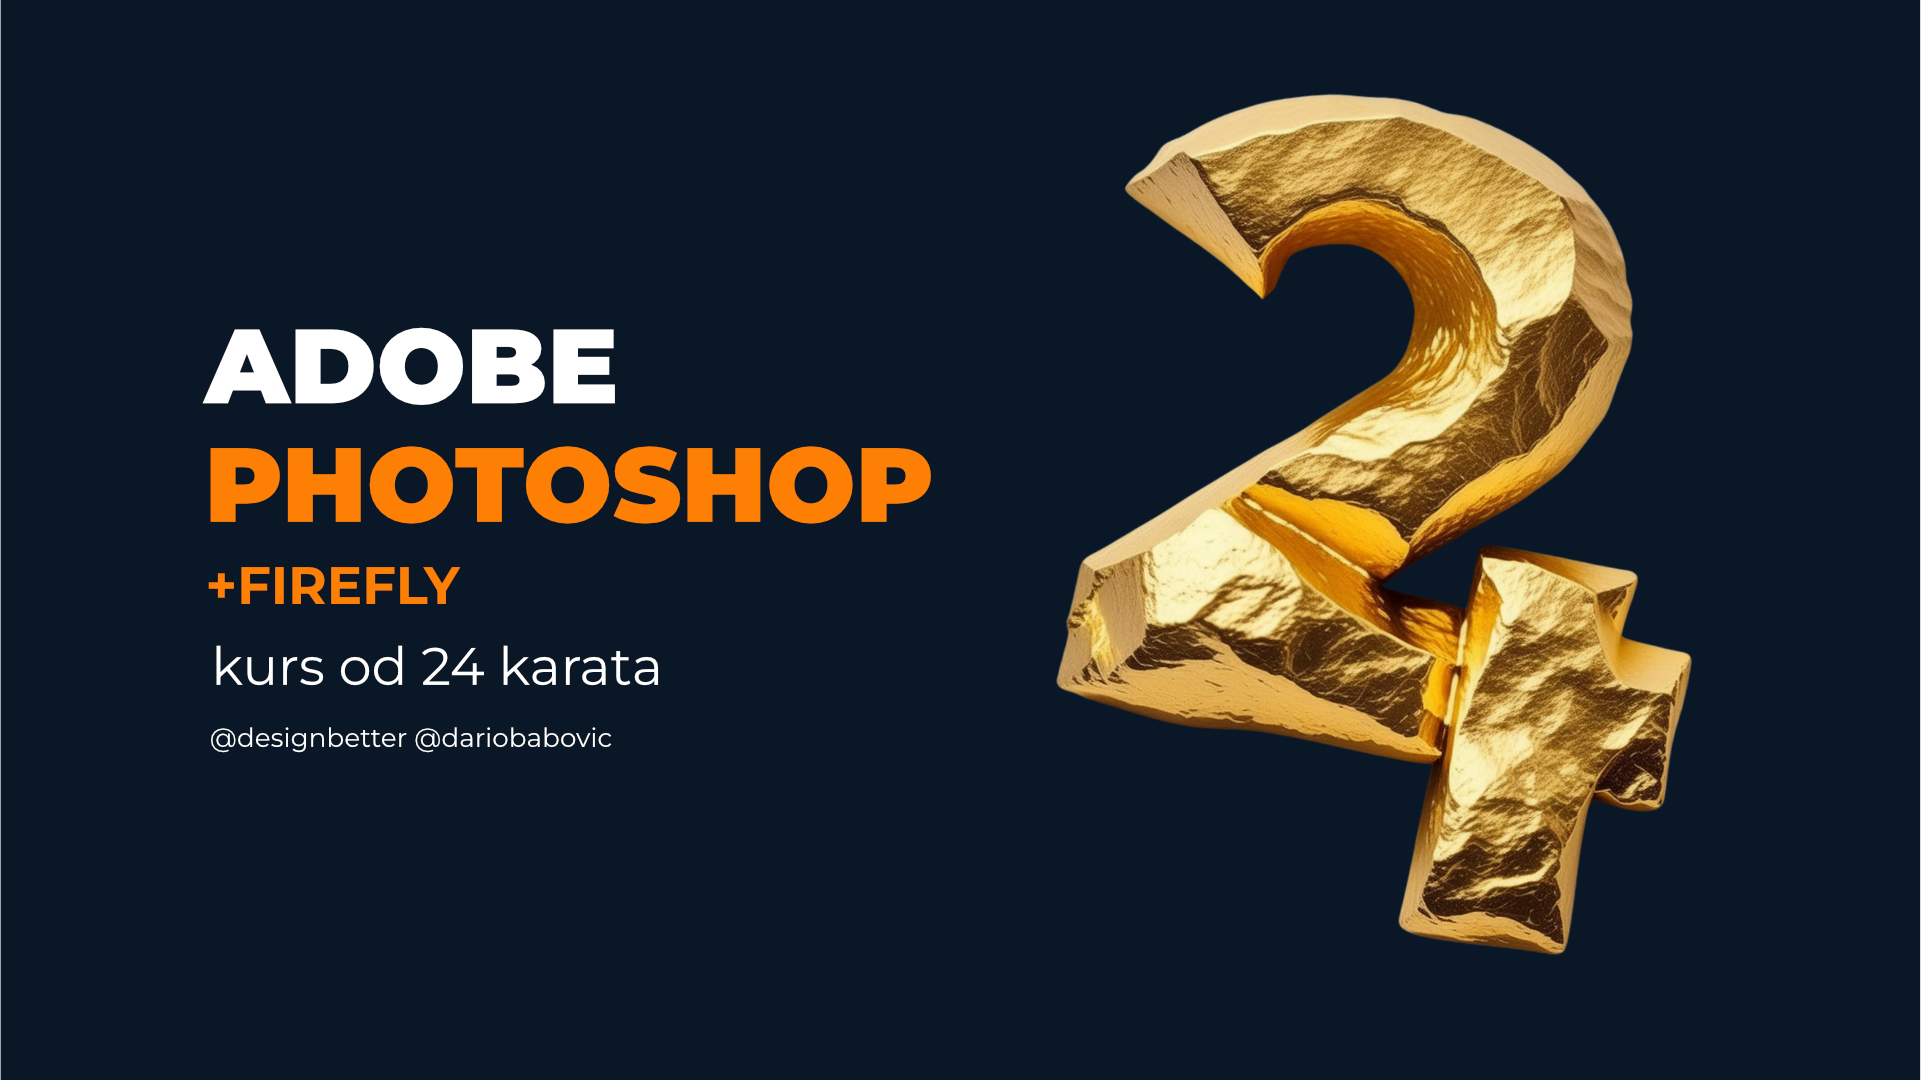 Adobe Photoshop 24